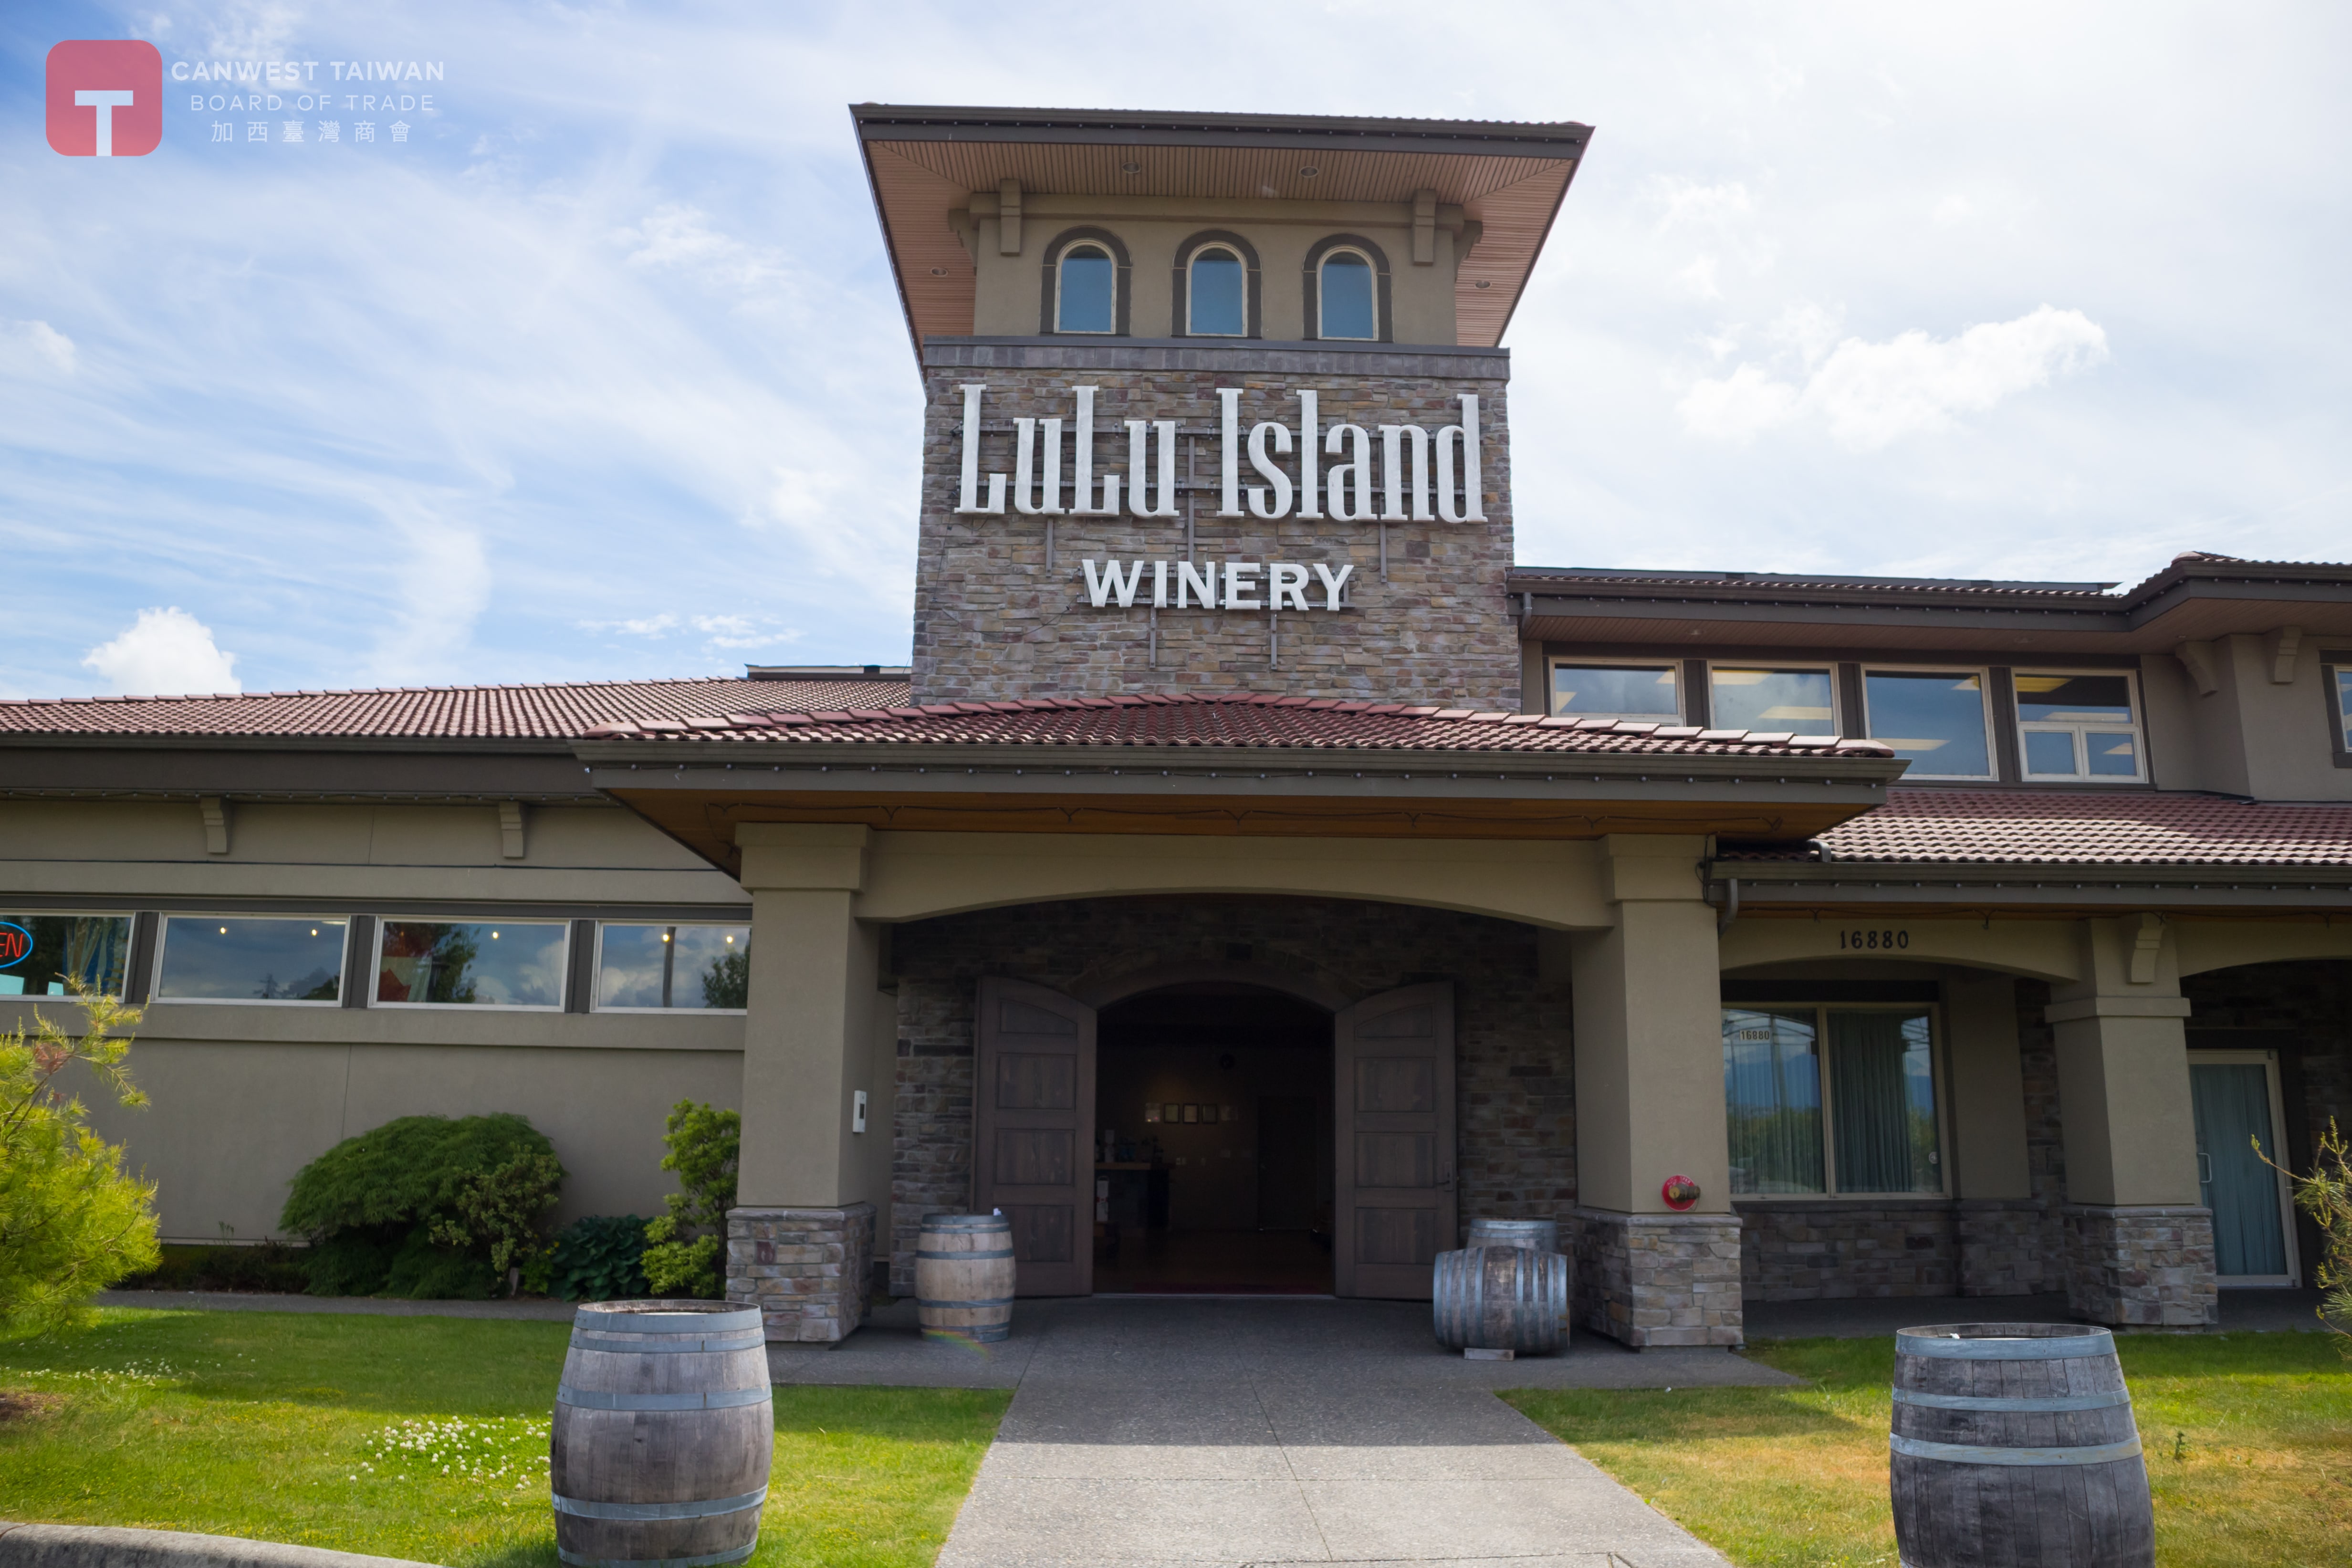 Venue: LuLu Island Winery